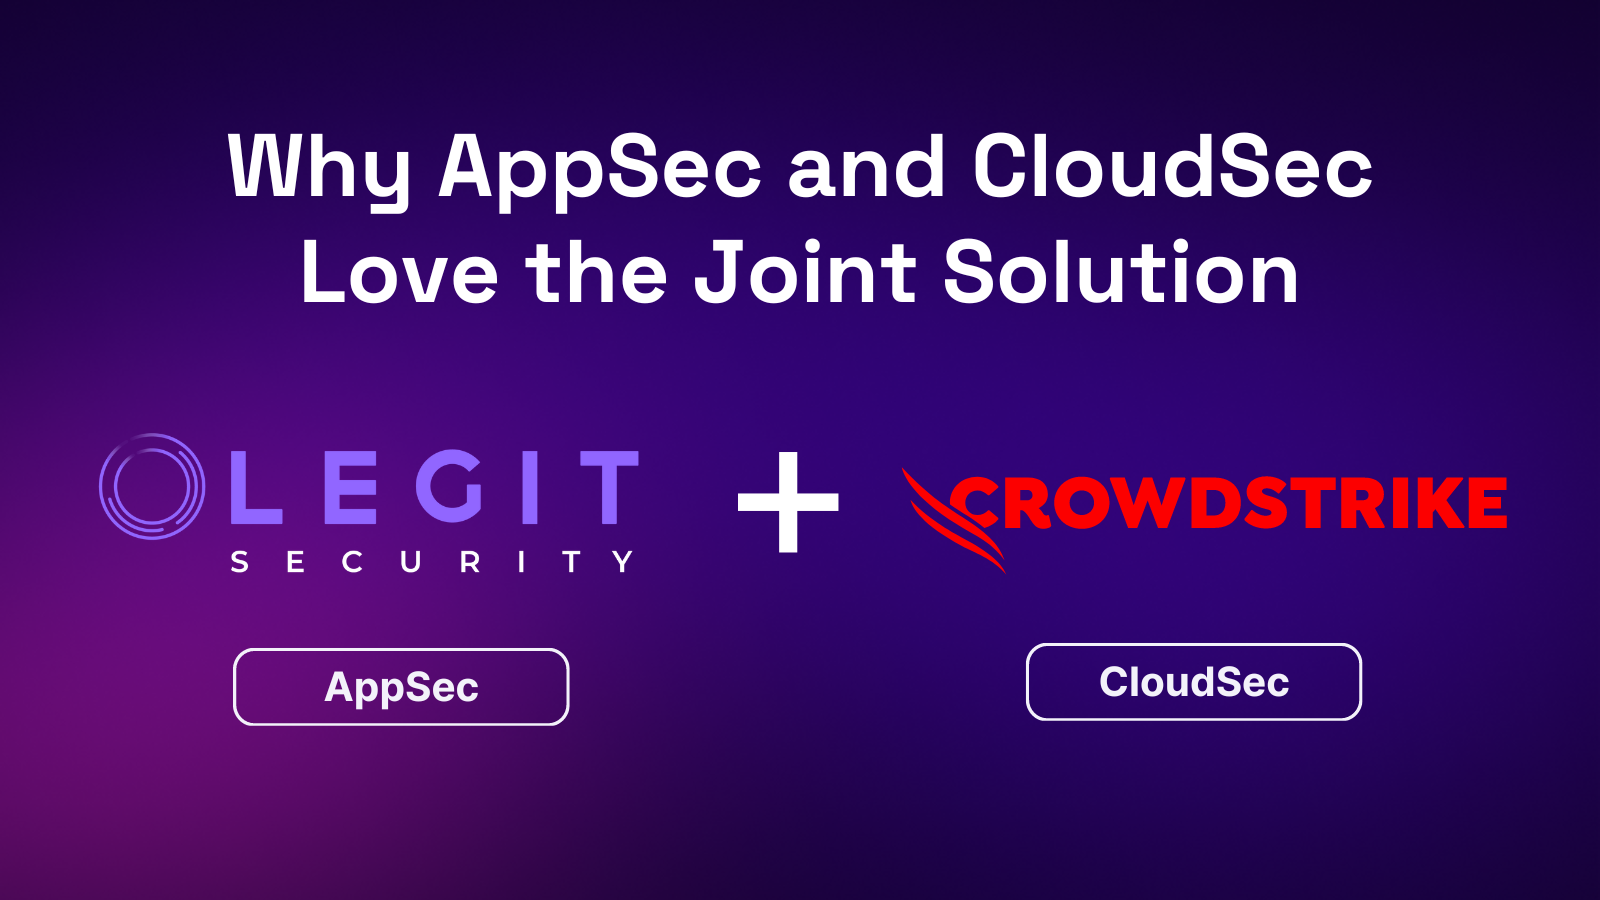 Legit Security | Legit Security's ASPM platform offers an enterprise-grade ASPM solution, proven by customers.